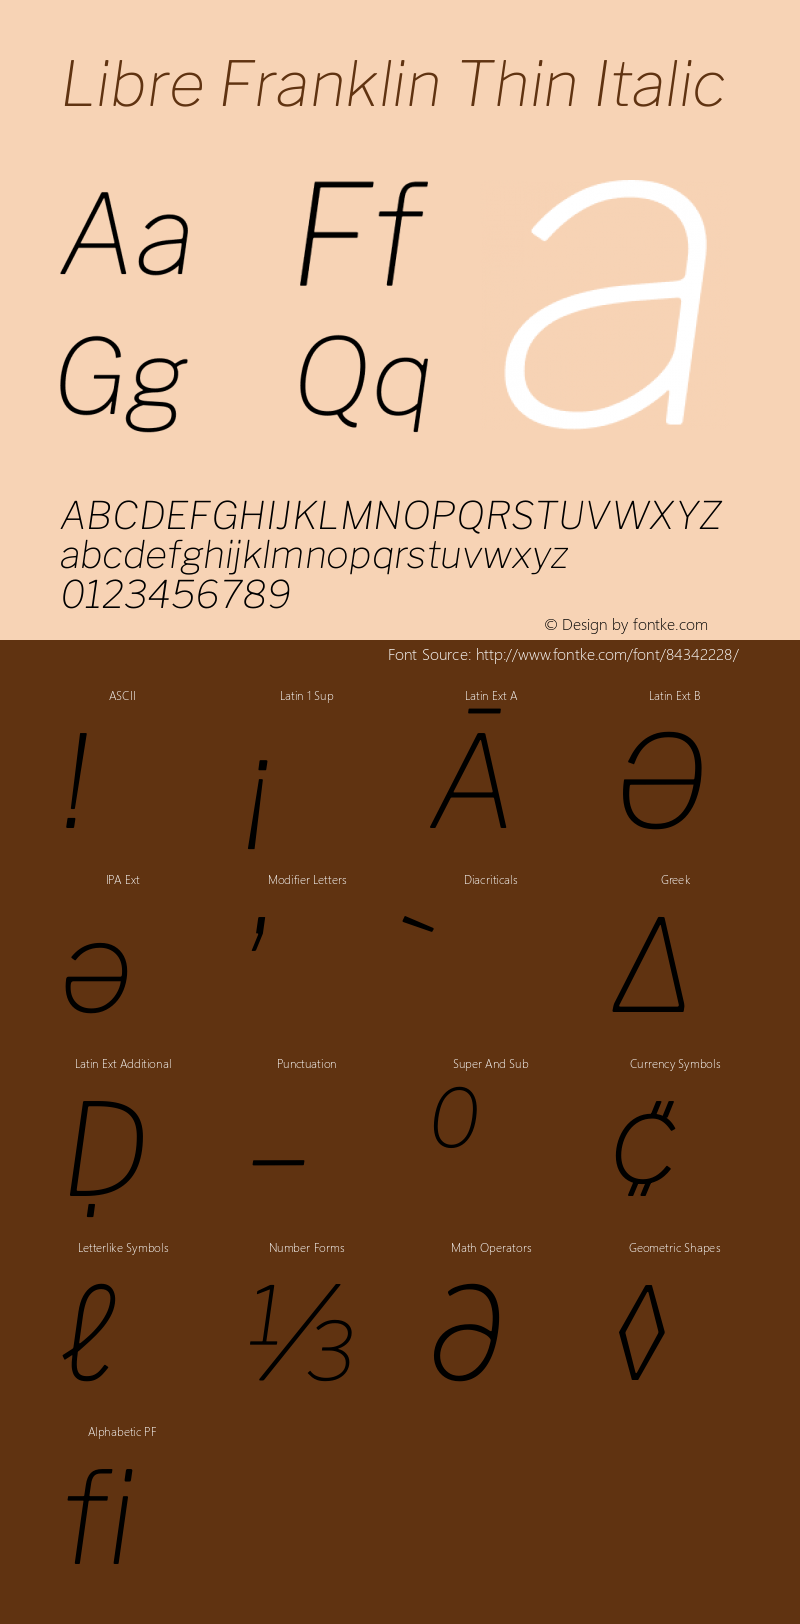 Libre Franklin Thin Italic Version 2.000 Font Sample